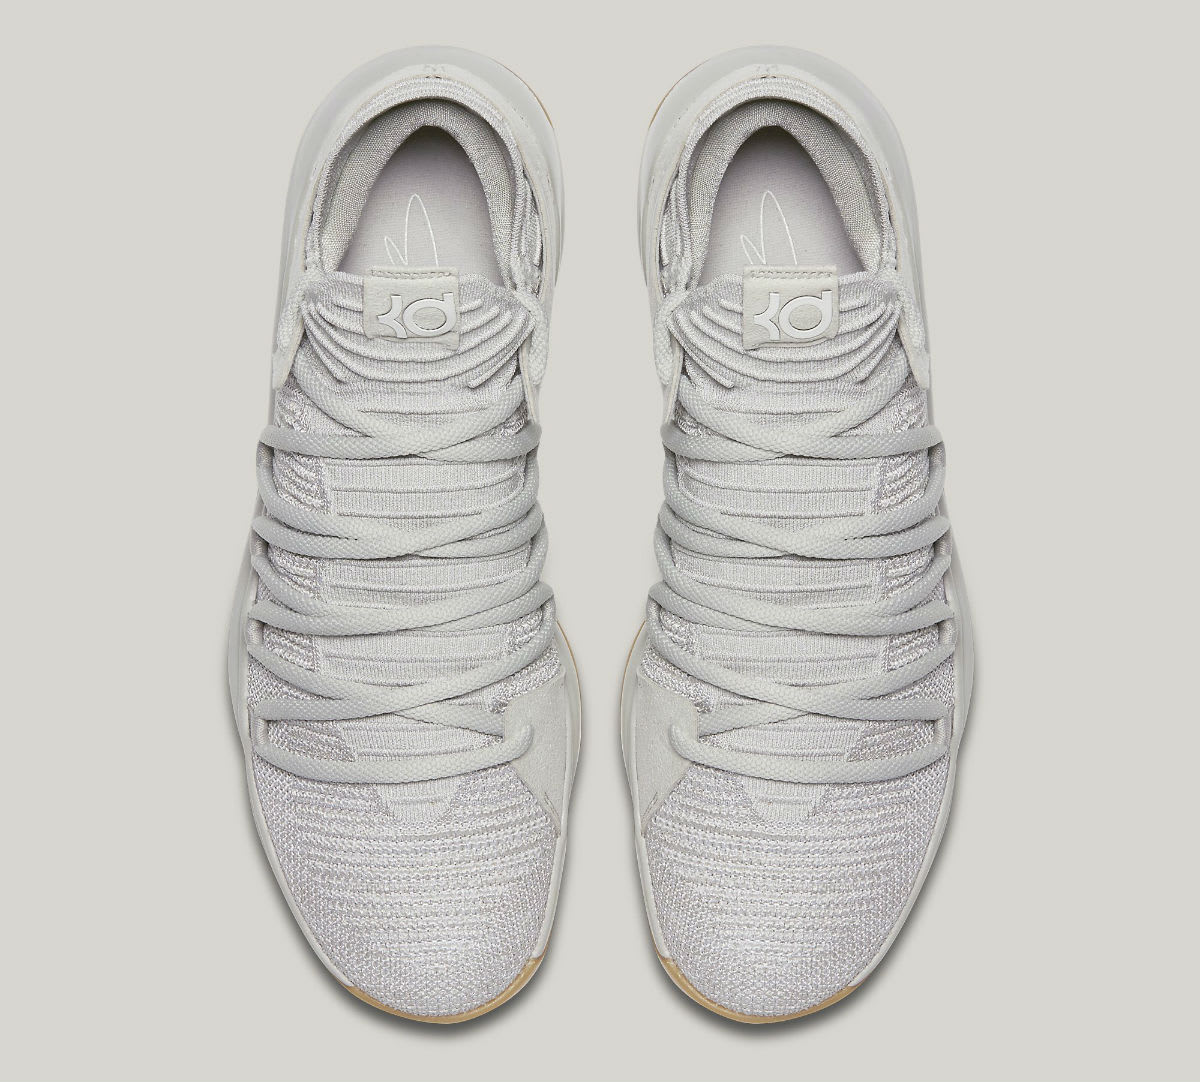 Nike KD 10 Pale Grey Light Bone Gum Release Date Top 897817-001